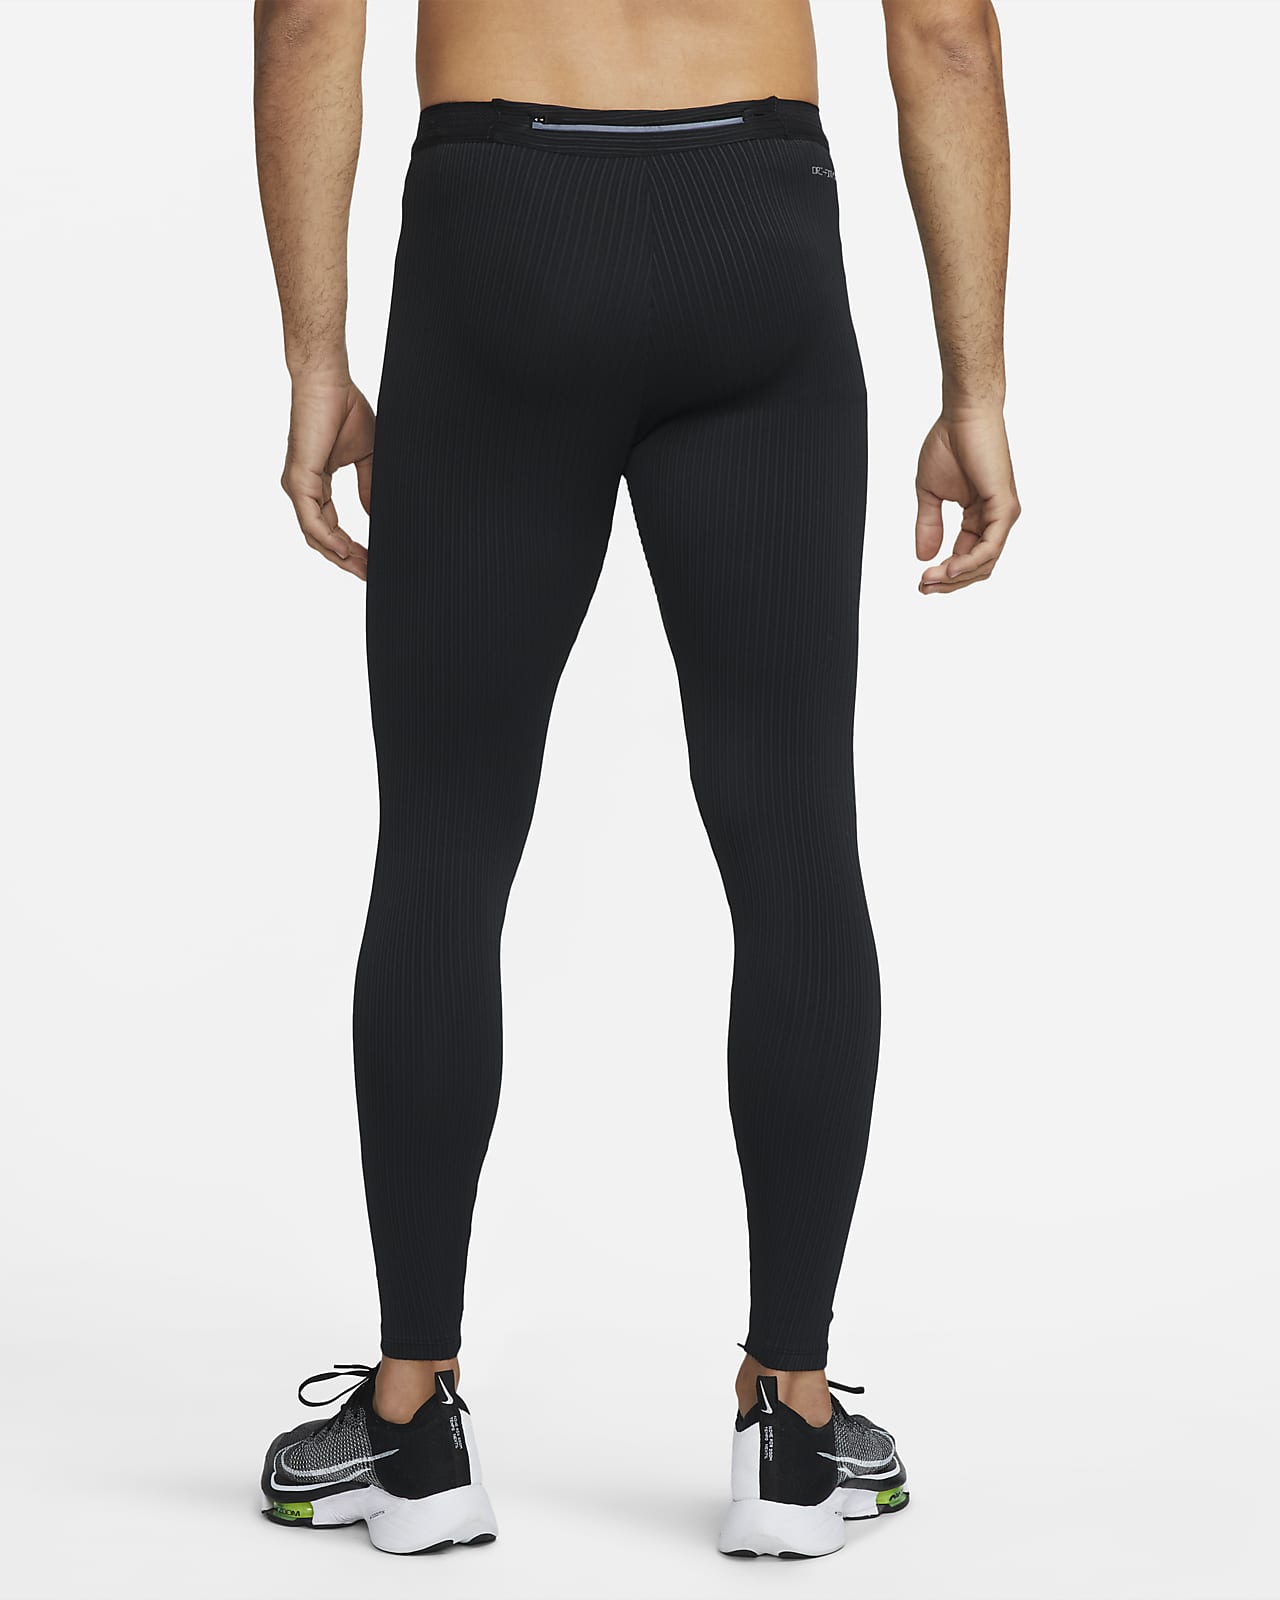 Nike Aeroswift 1/2 Tights Running Shorts - Men's Large $90.00 DM4622 016  Red